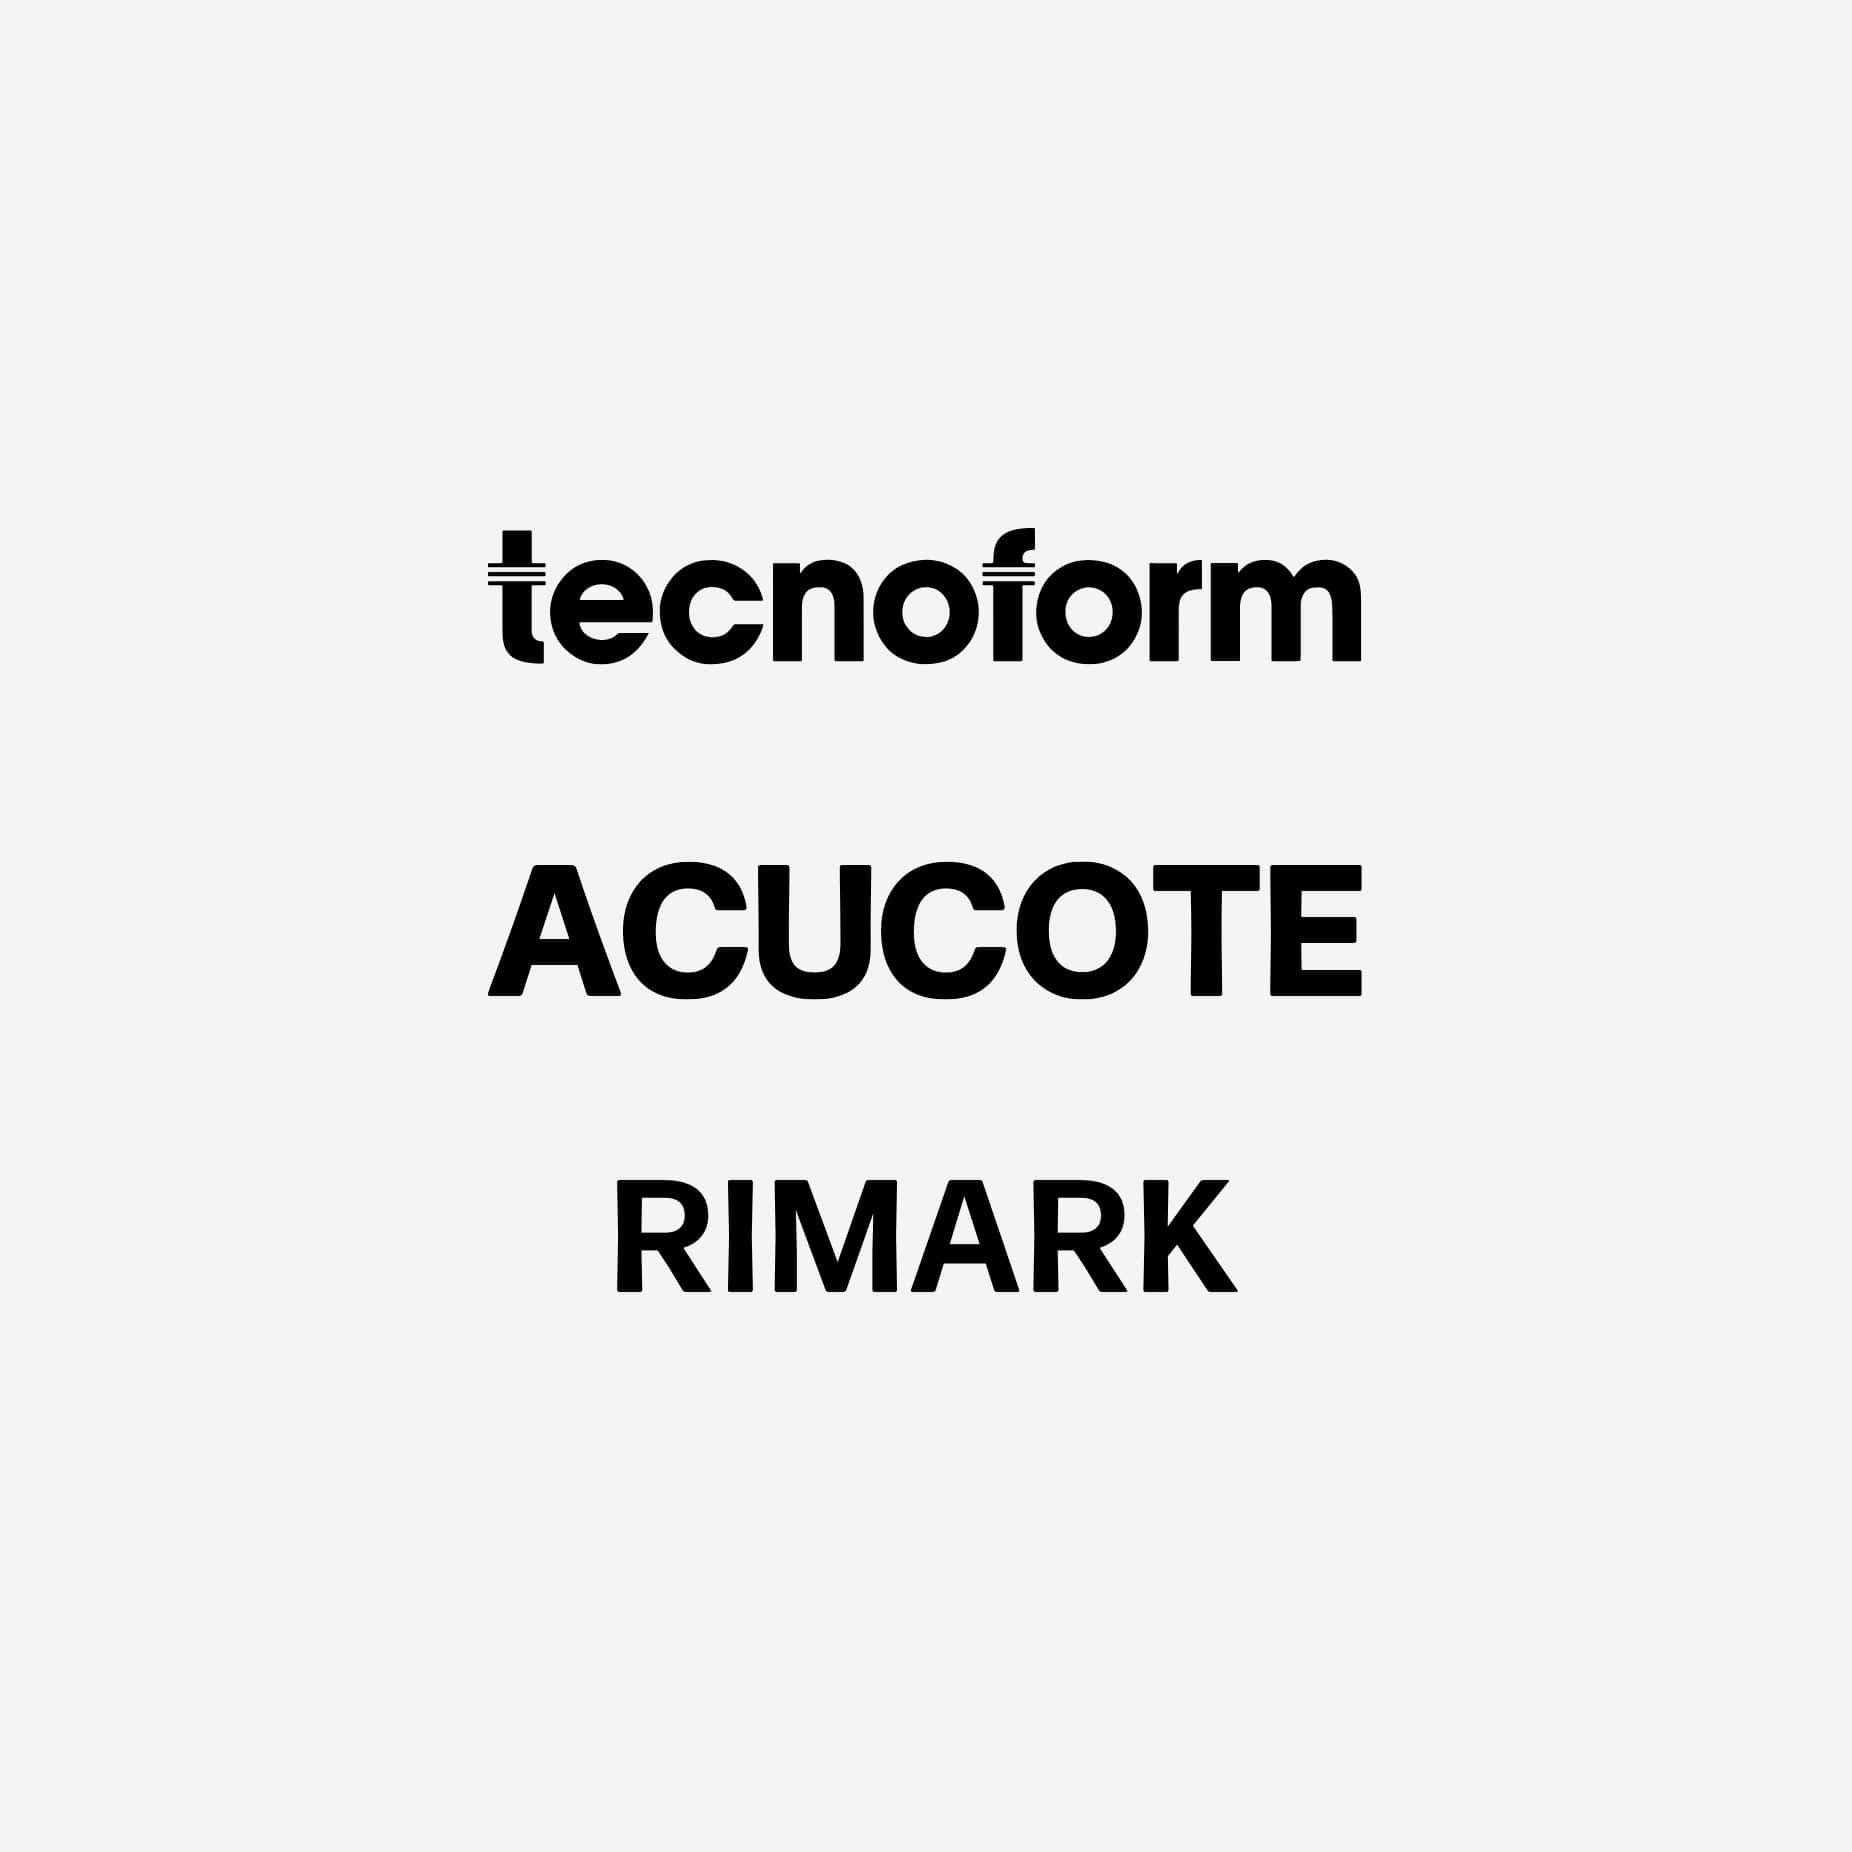 Tecnoform, Acucote, Rimark